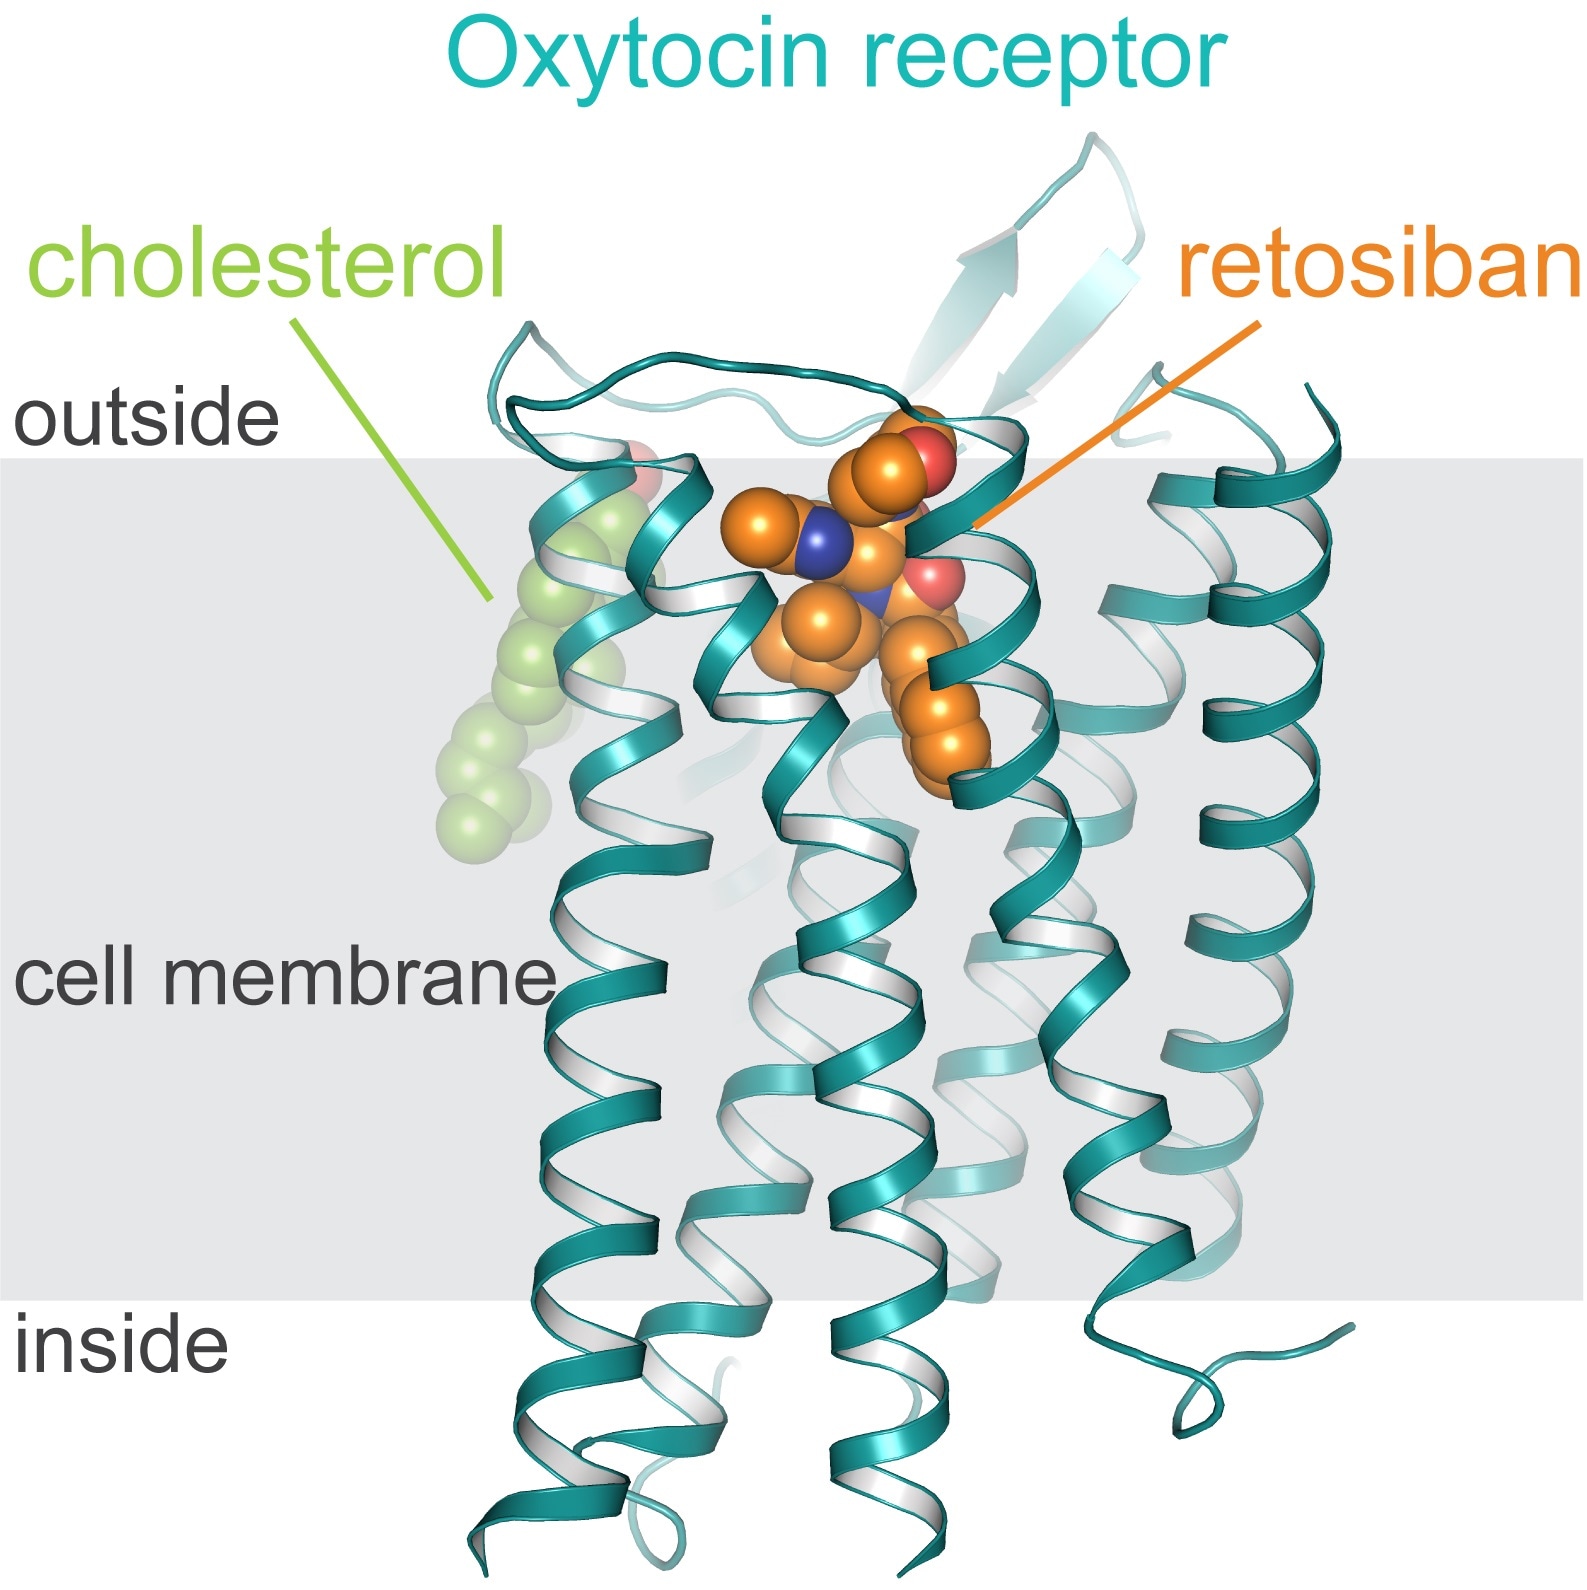 Substances that target oxytocin receptors can help treat various diseases